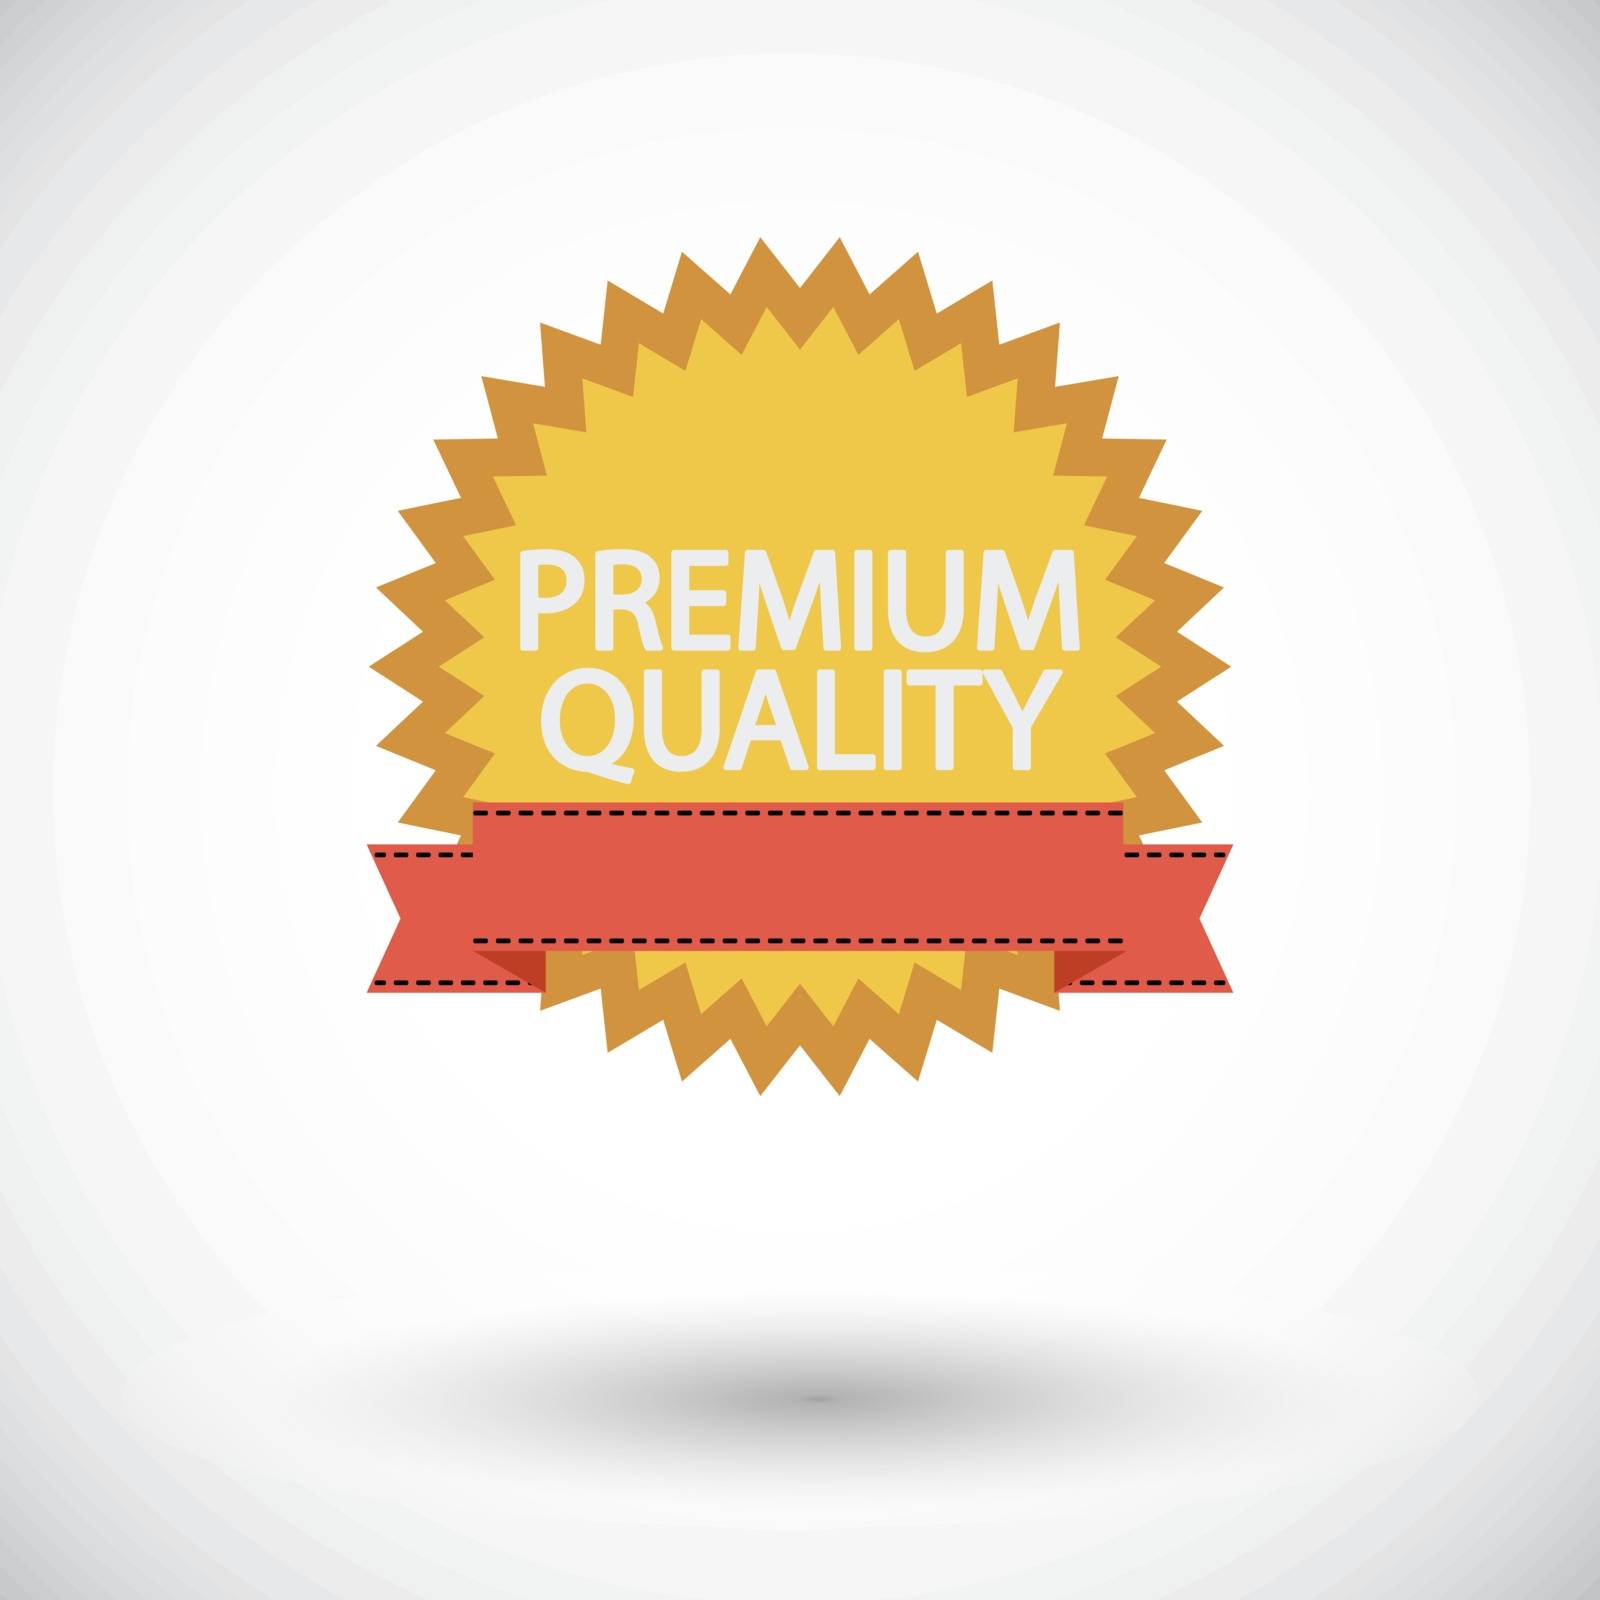 Premium Quality. Single flat icon on white background. Vector illustration.